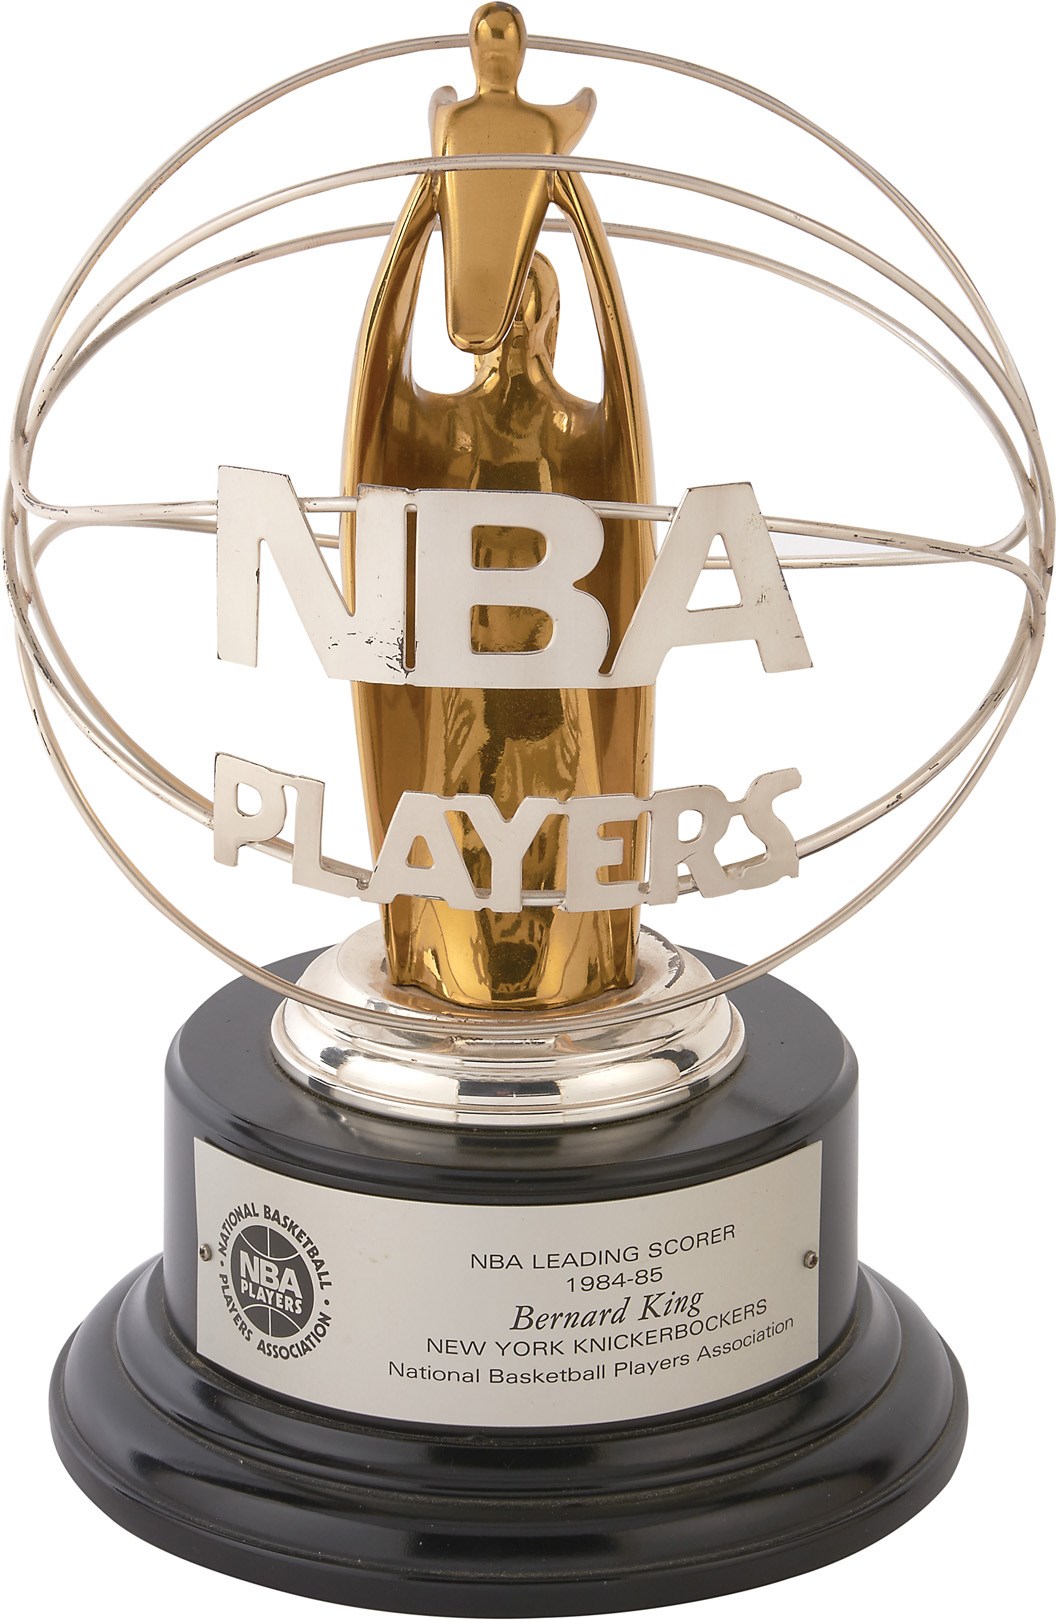 - 1984-85 Bernard King NBA Leading Scorer Award